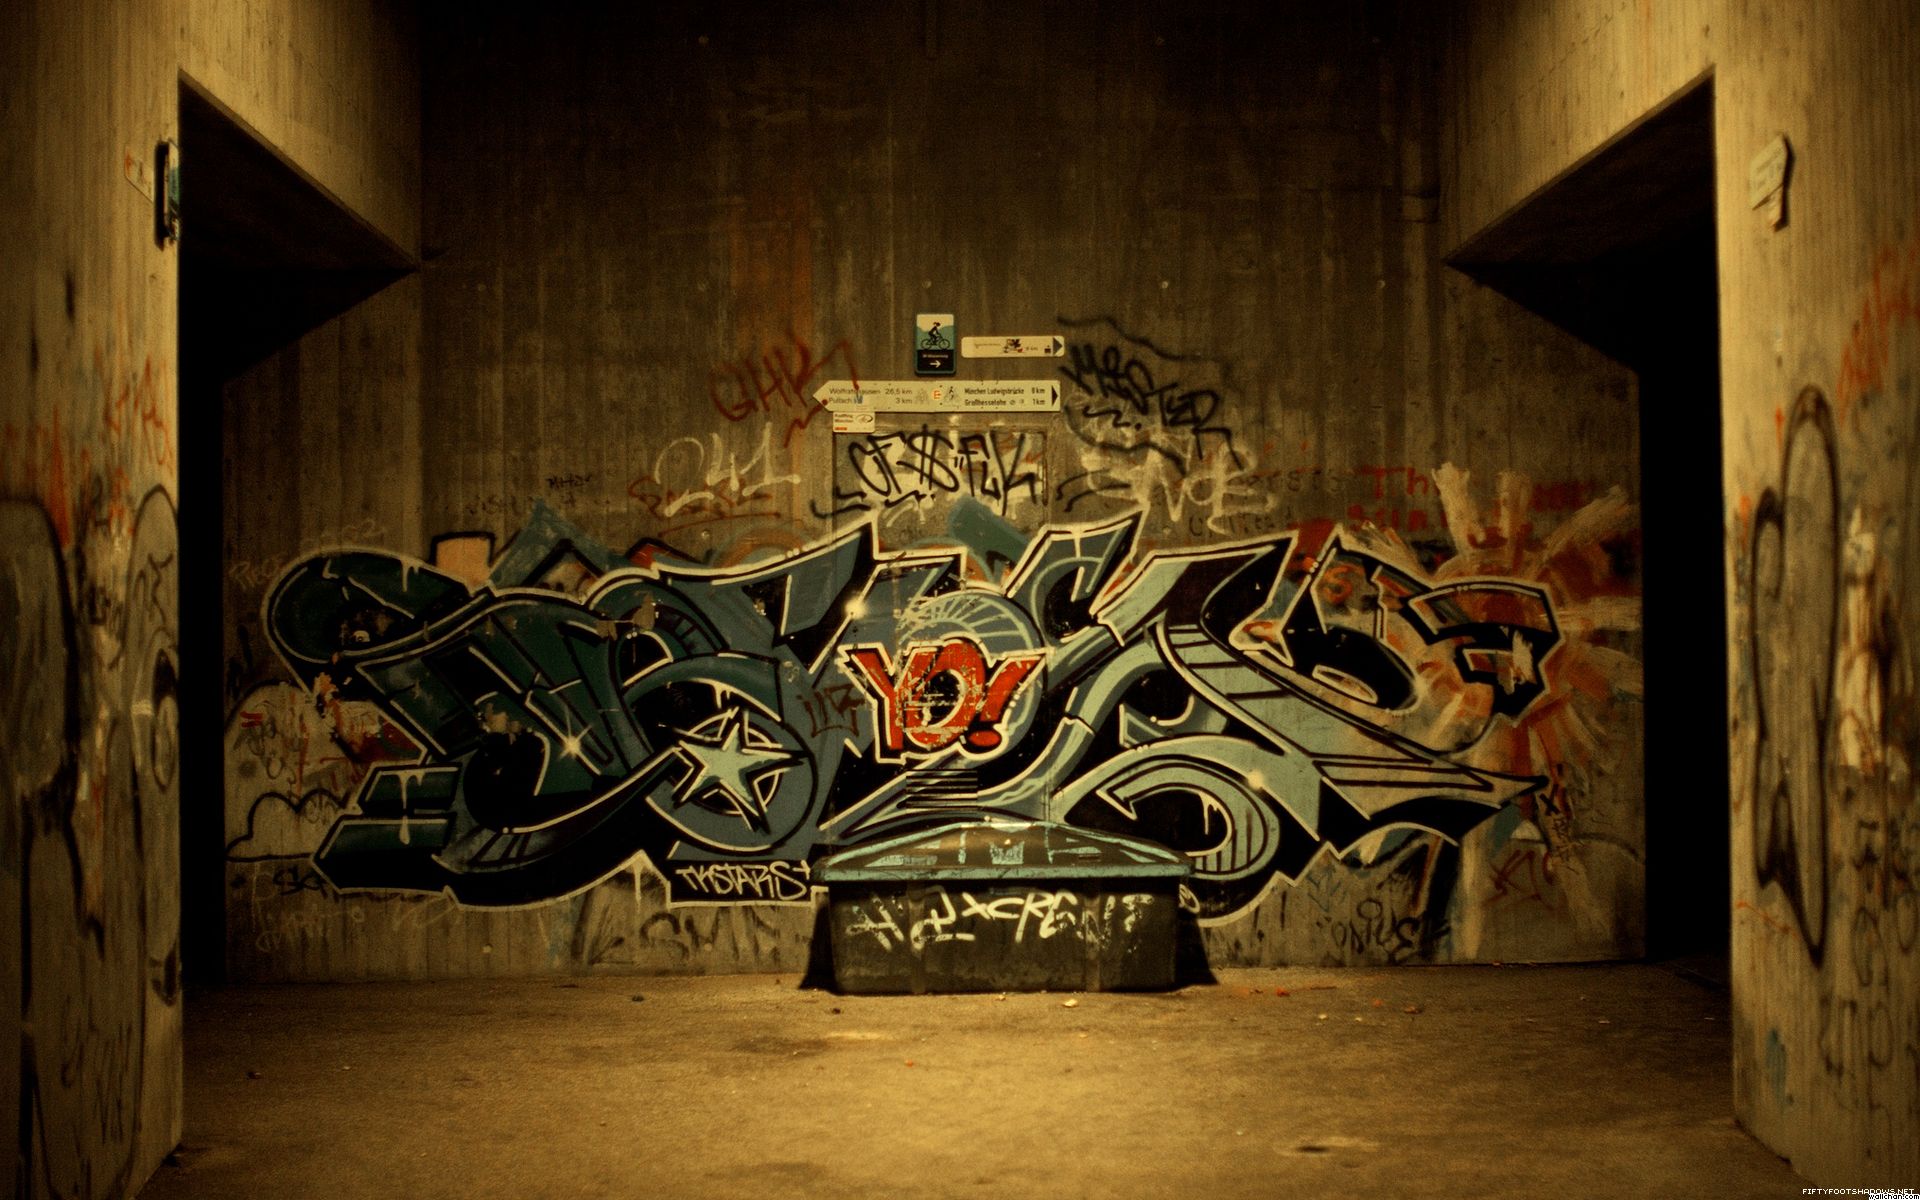 75+] Hip Hop Graffiti Wallpaper - WallpaperSafari